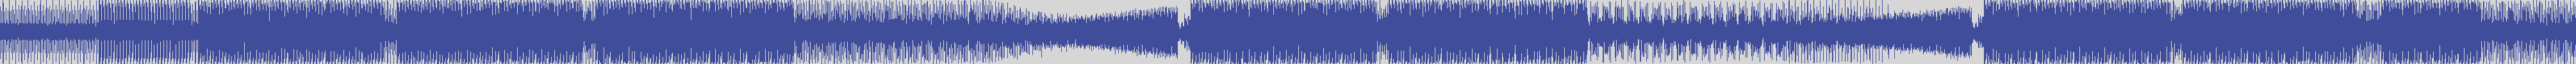 nonstop_one [NSO010] Piem, Mauro Venti - Sheet [Original Mix] audio wave form